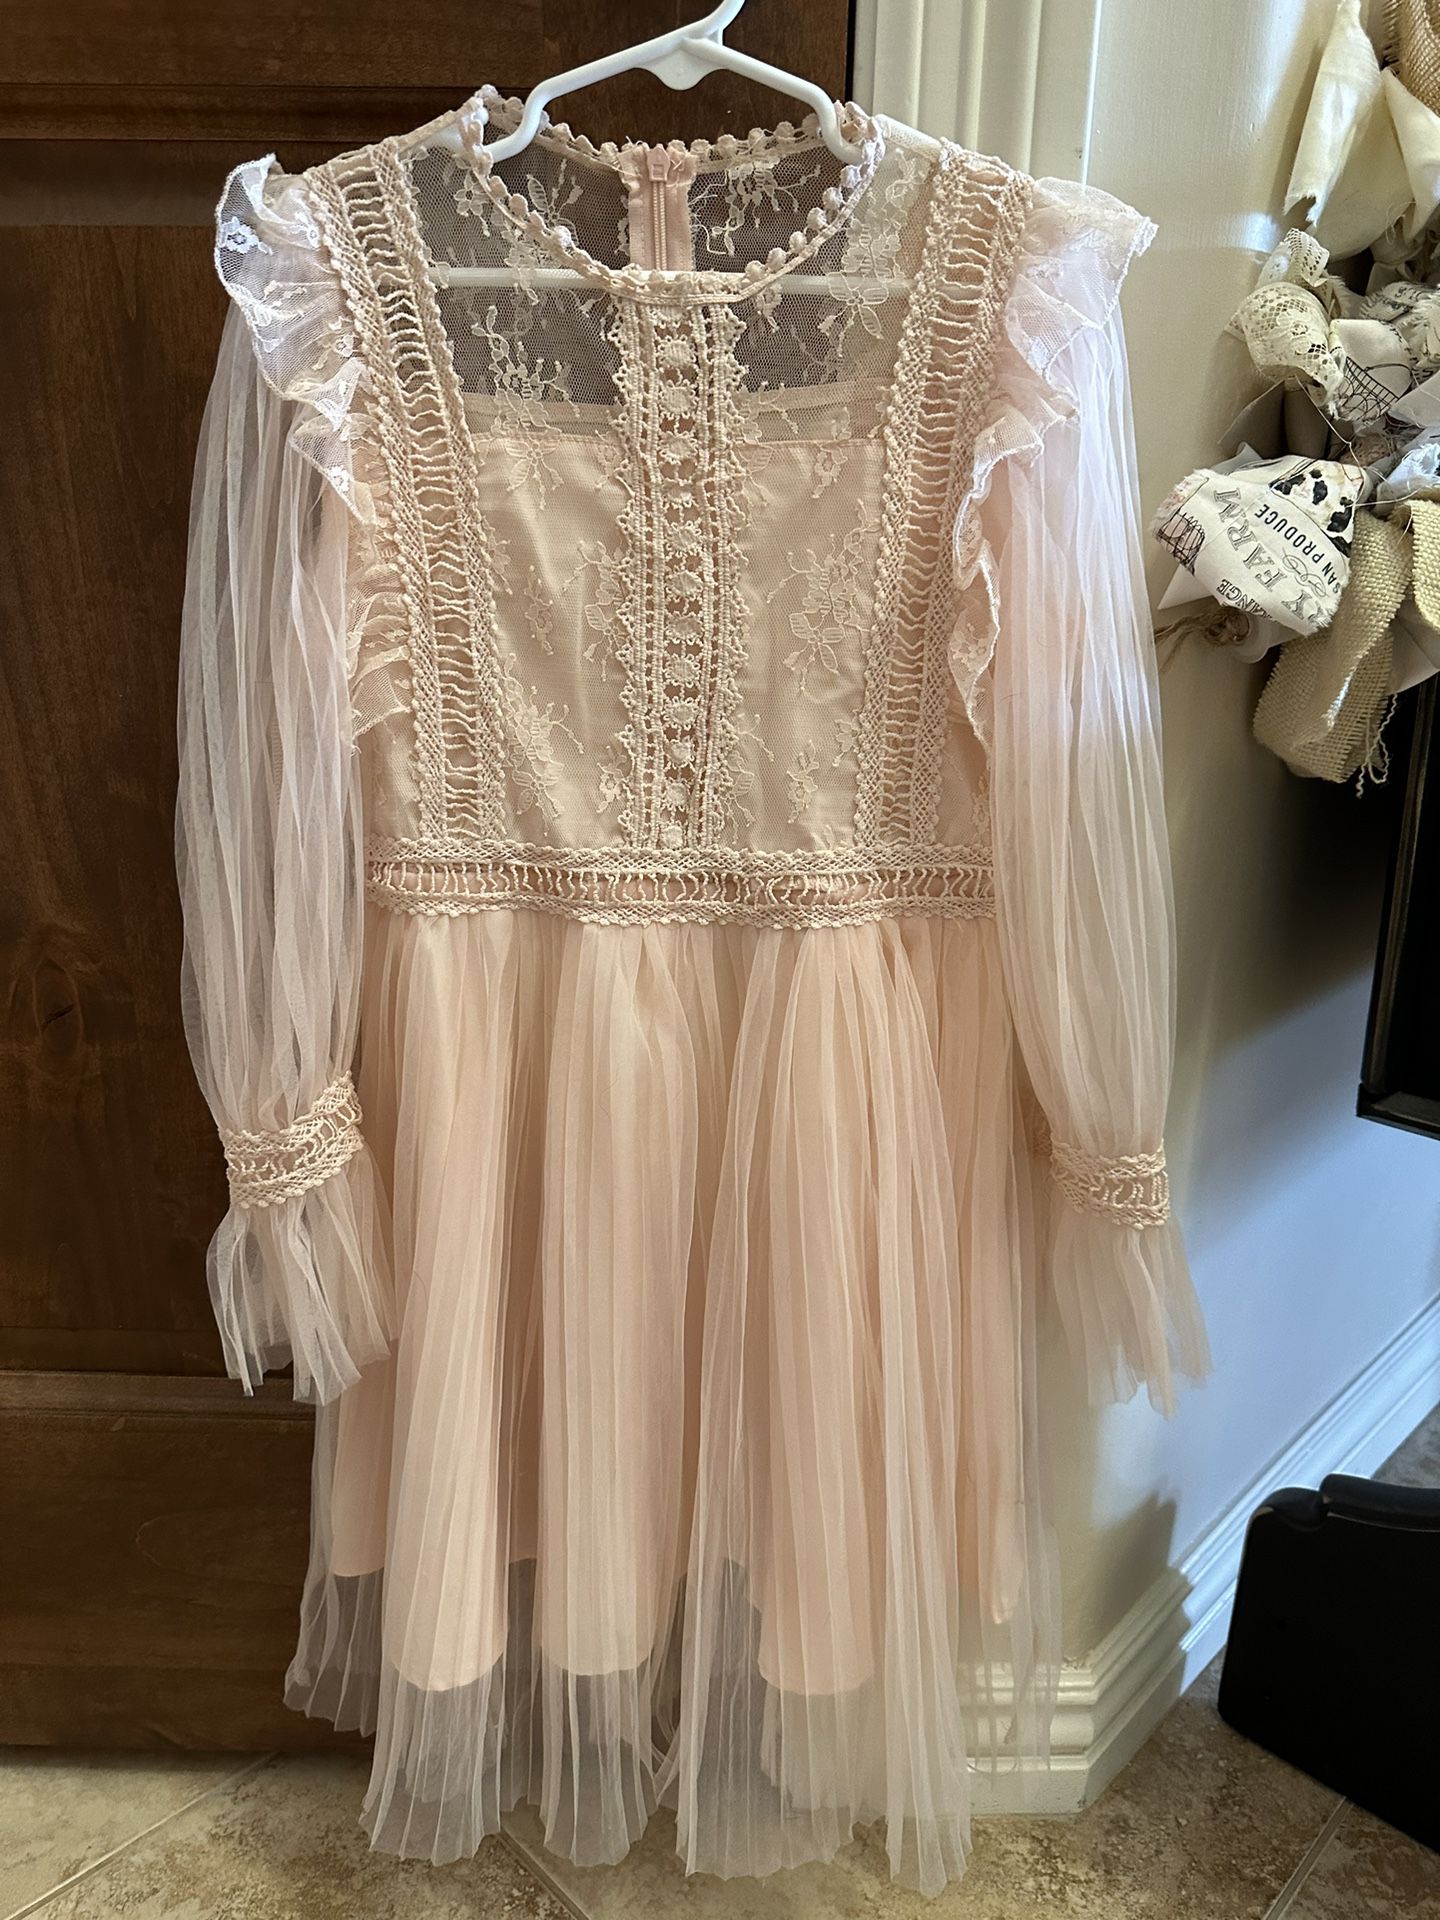 Girls Size 8 Pale Pink Dress $10